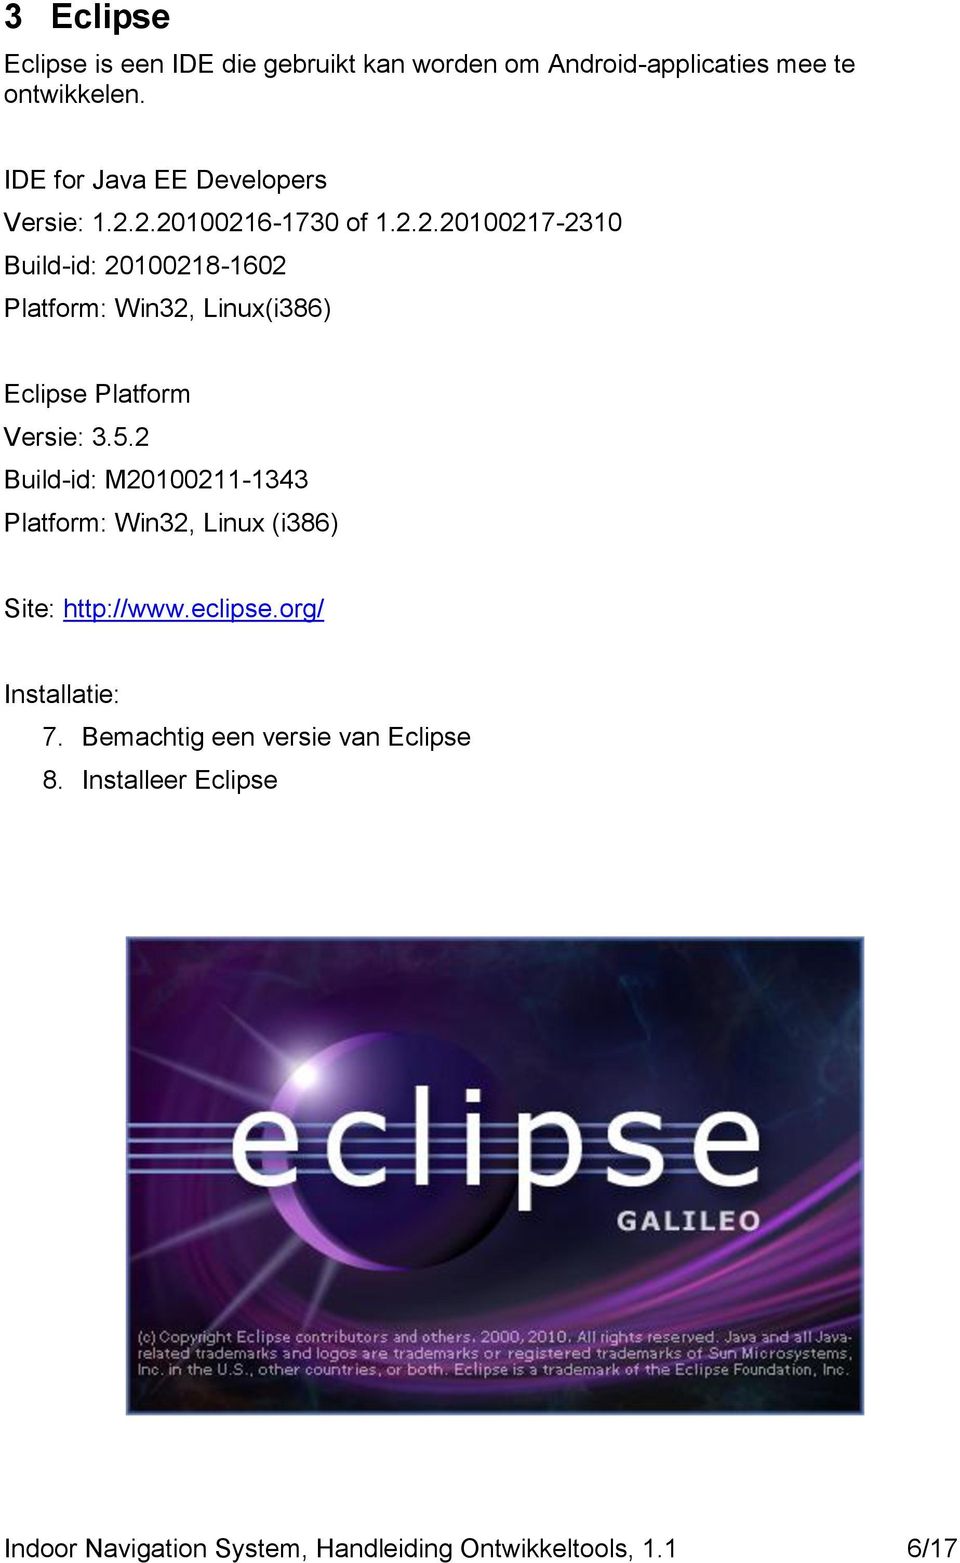 2.20100216-1730 of 1.2.2.20100217-2310 Build-id: 20100218-1602 Platform: Win32, Linux(i386) Eclipse Platform Versie: 3.